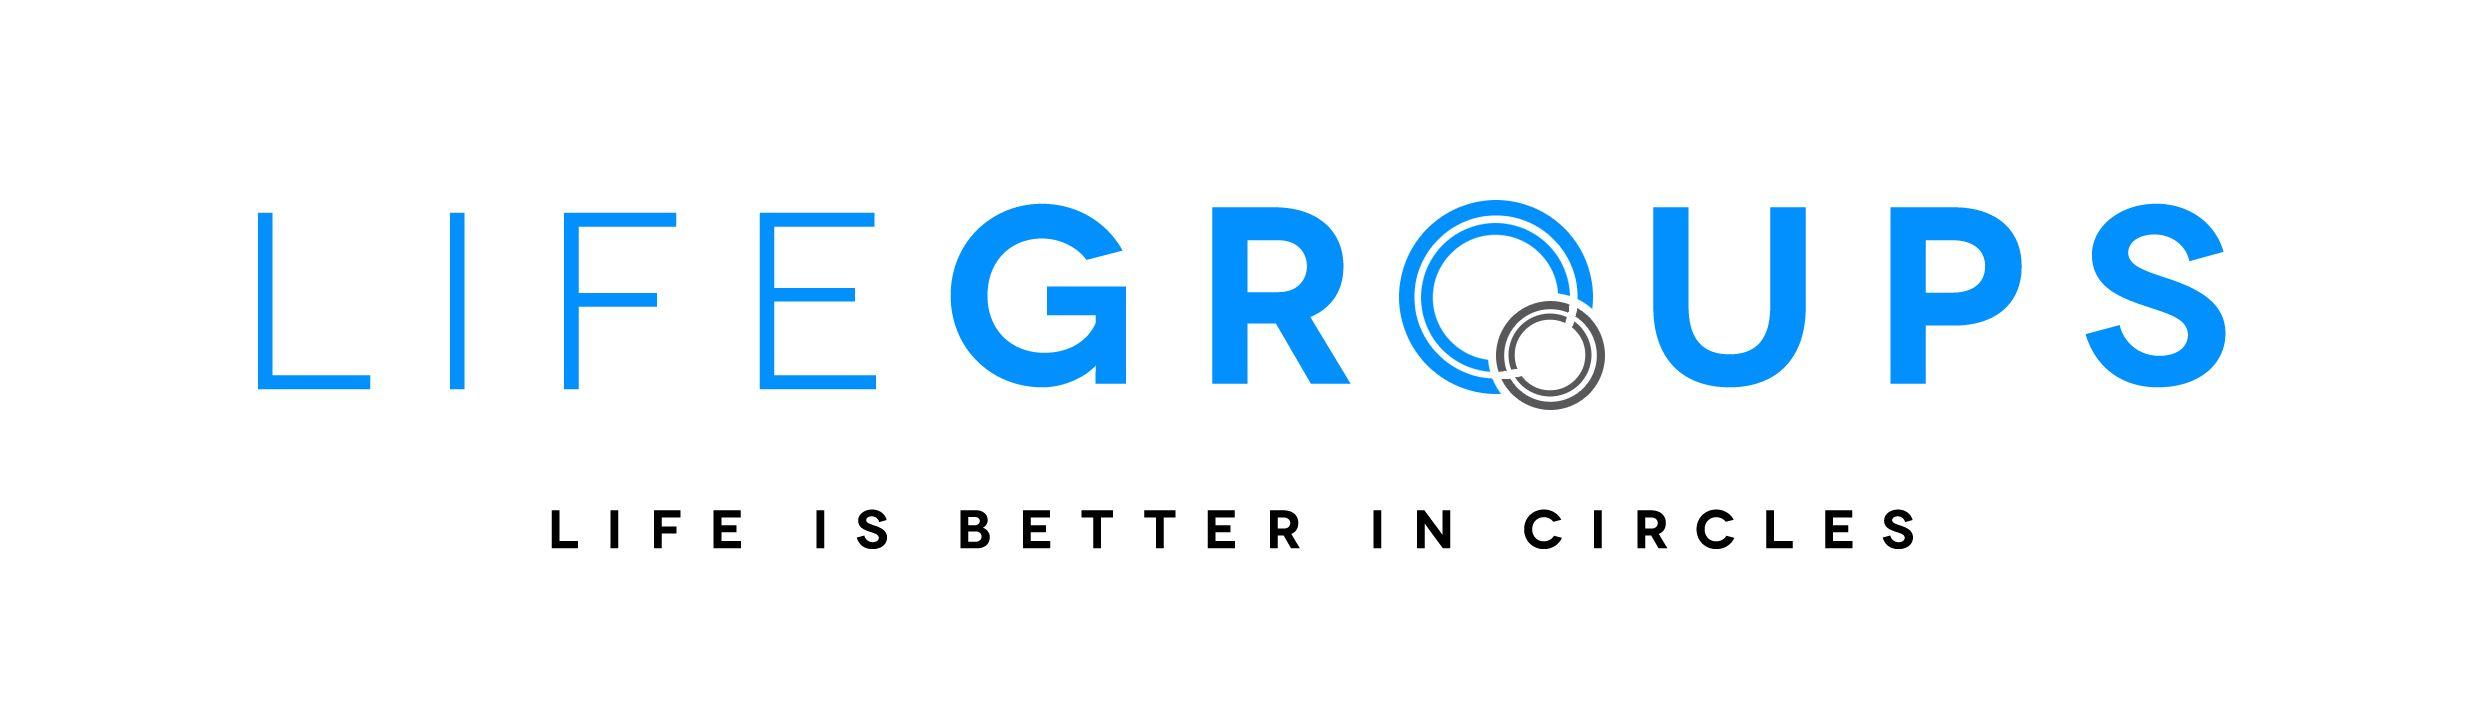 LifeGroups Logo - Lifegroups Central Campus - newhope church